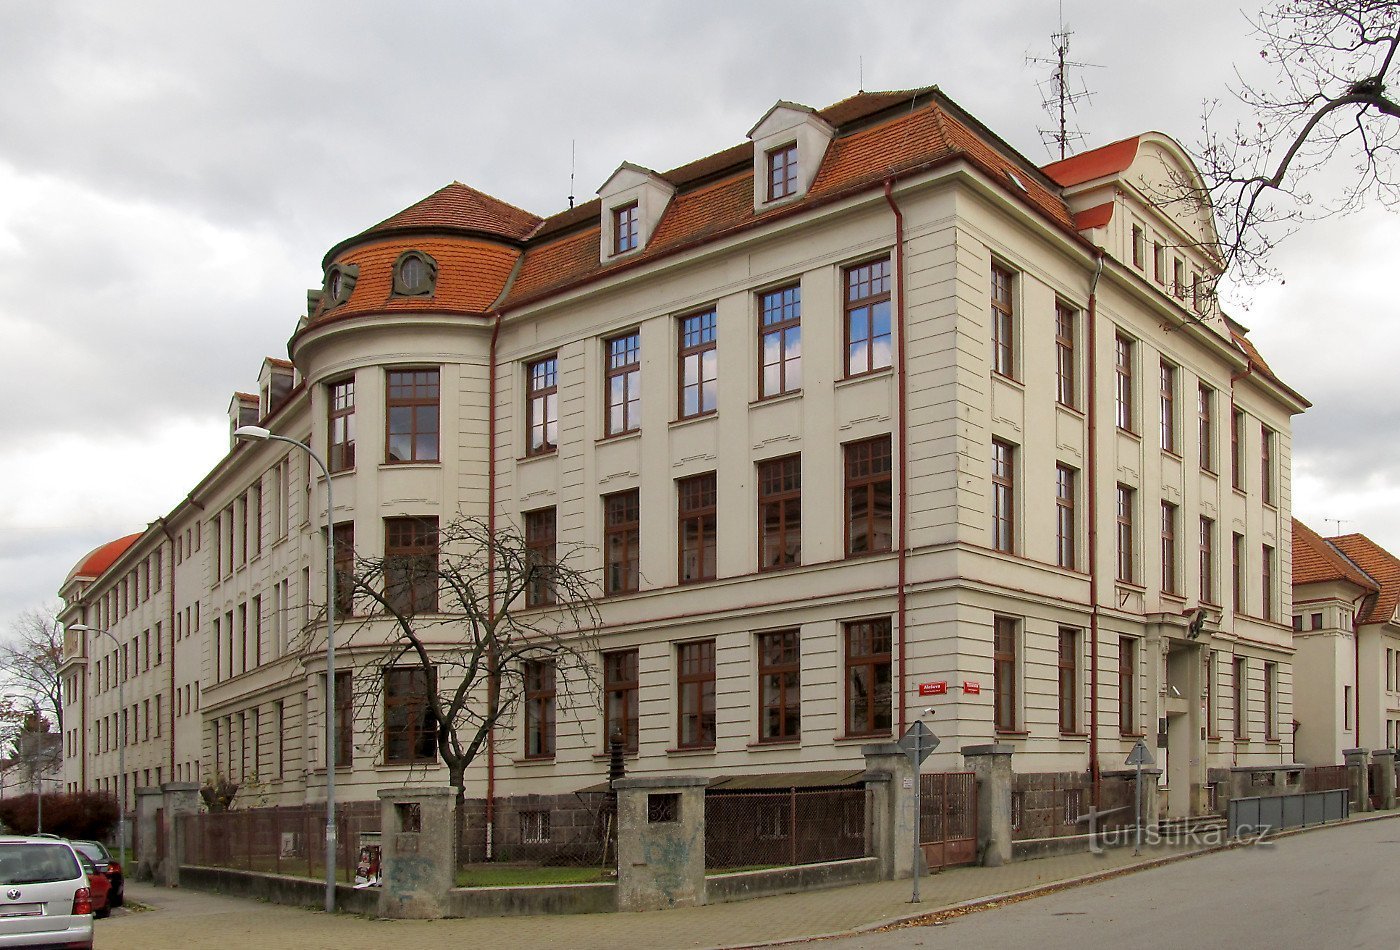 České Budějovice - Middelbare industriële school voor werktuigbouwkunde en elektrotechniek